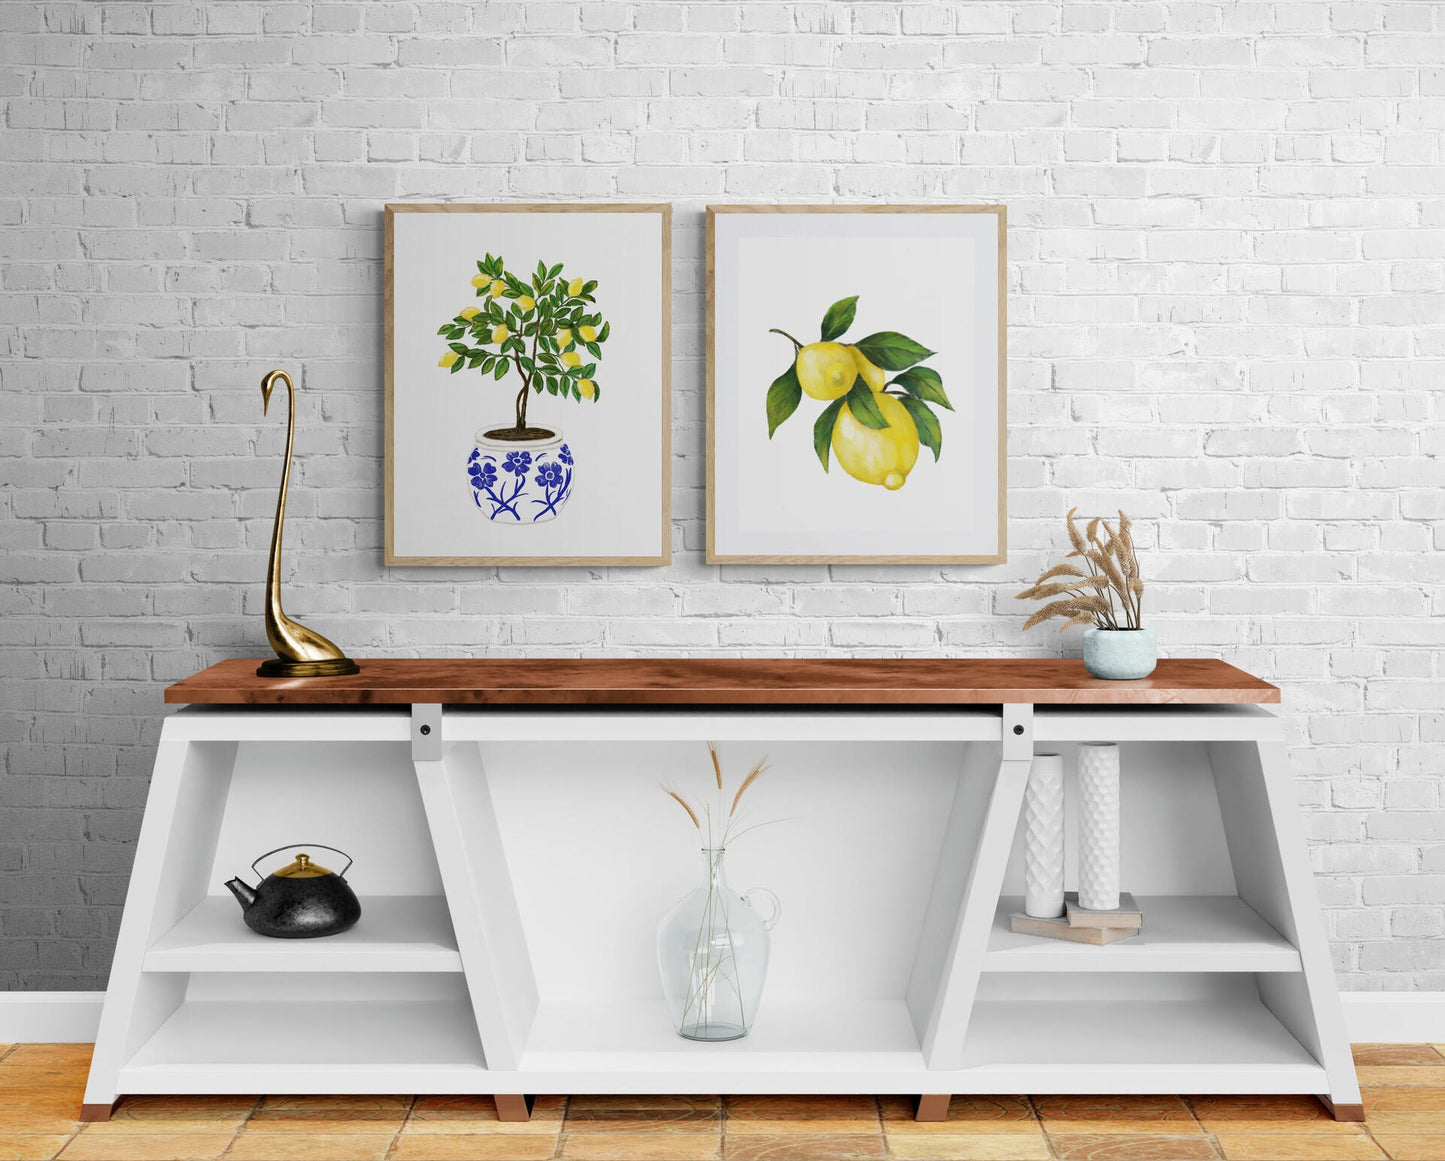 Set of 2 Lemon and Tree Art Print, Lemons Wall Art, Blue and White Planter, Dining Room Decor, Citrus Painting, Farmhouse Decor